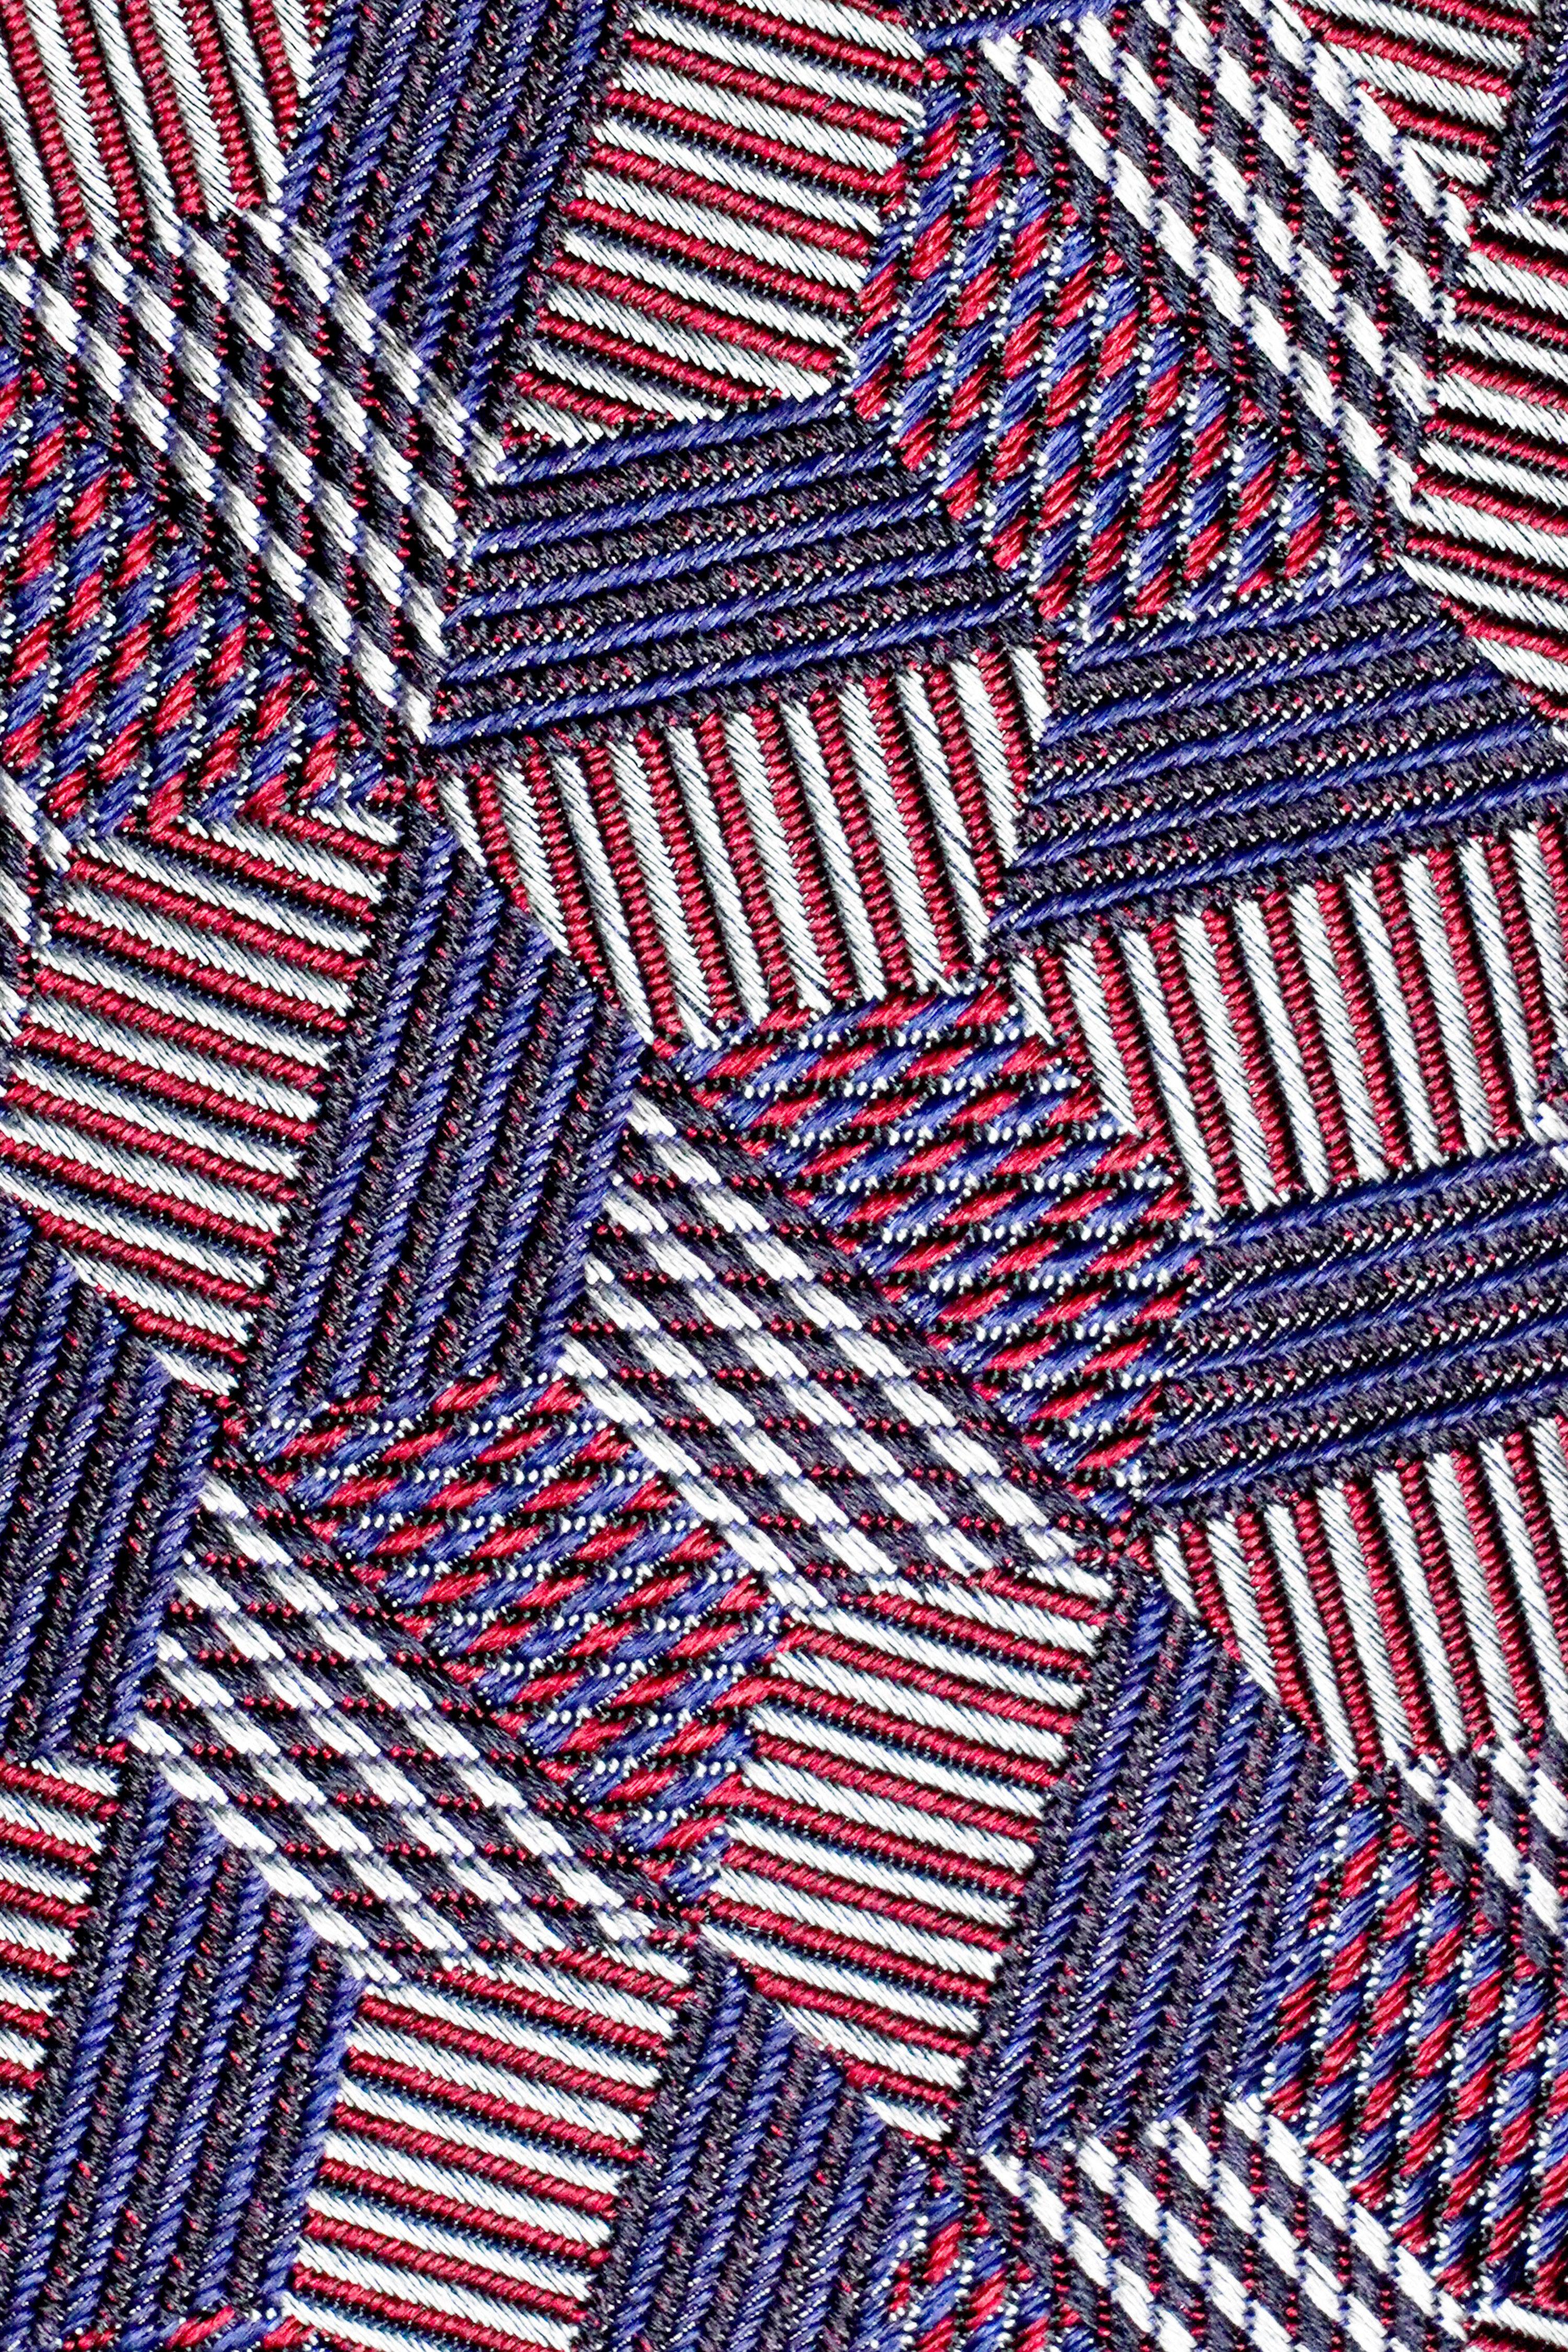 Alt view 2 Holton Weave Tie in Purple